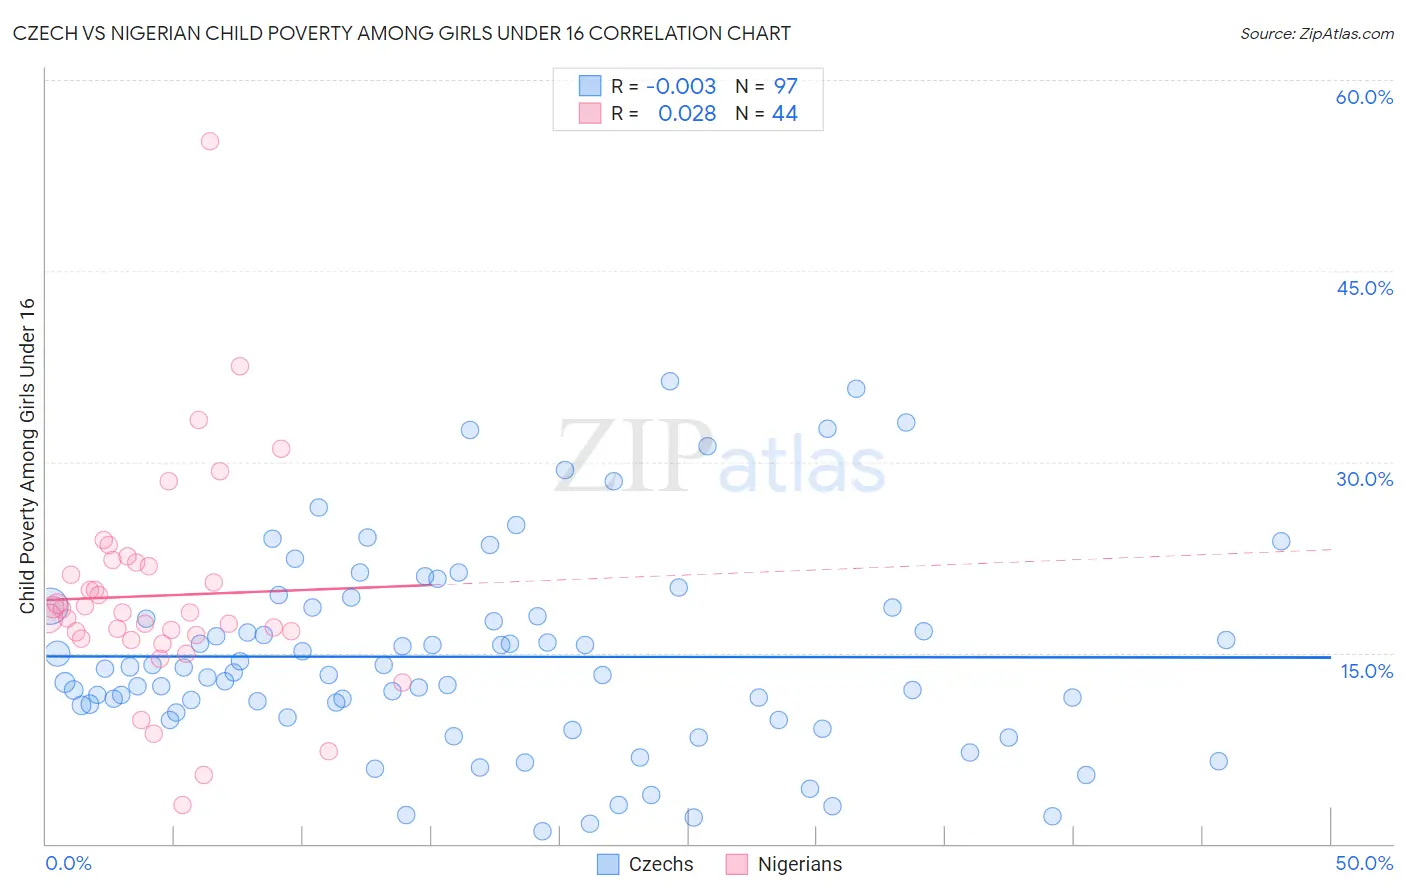 Czech vs Nigerian Child Poverty Among Girls Under 16